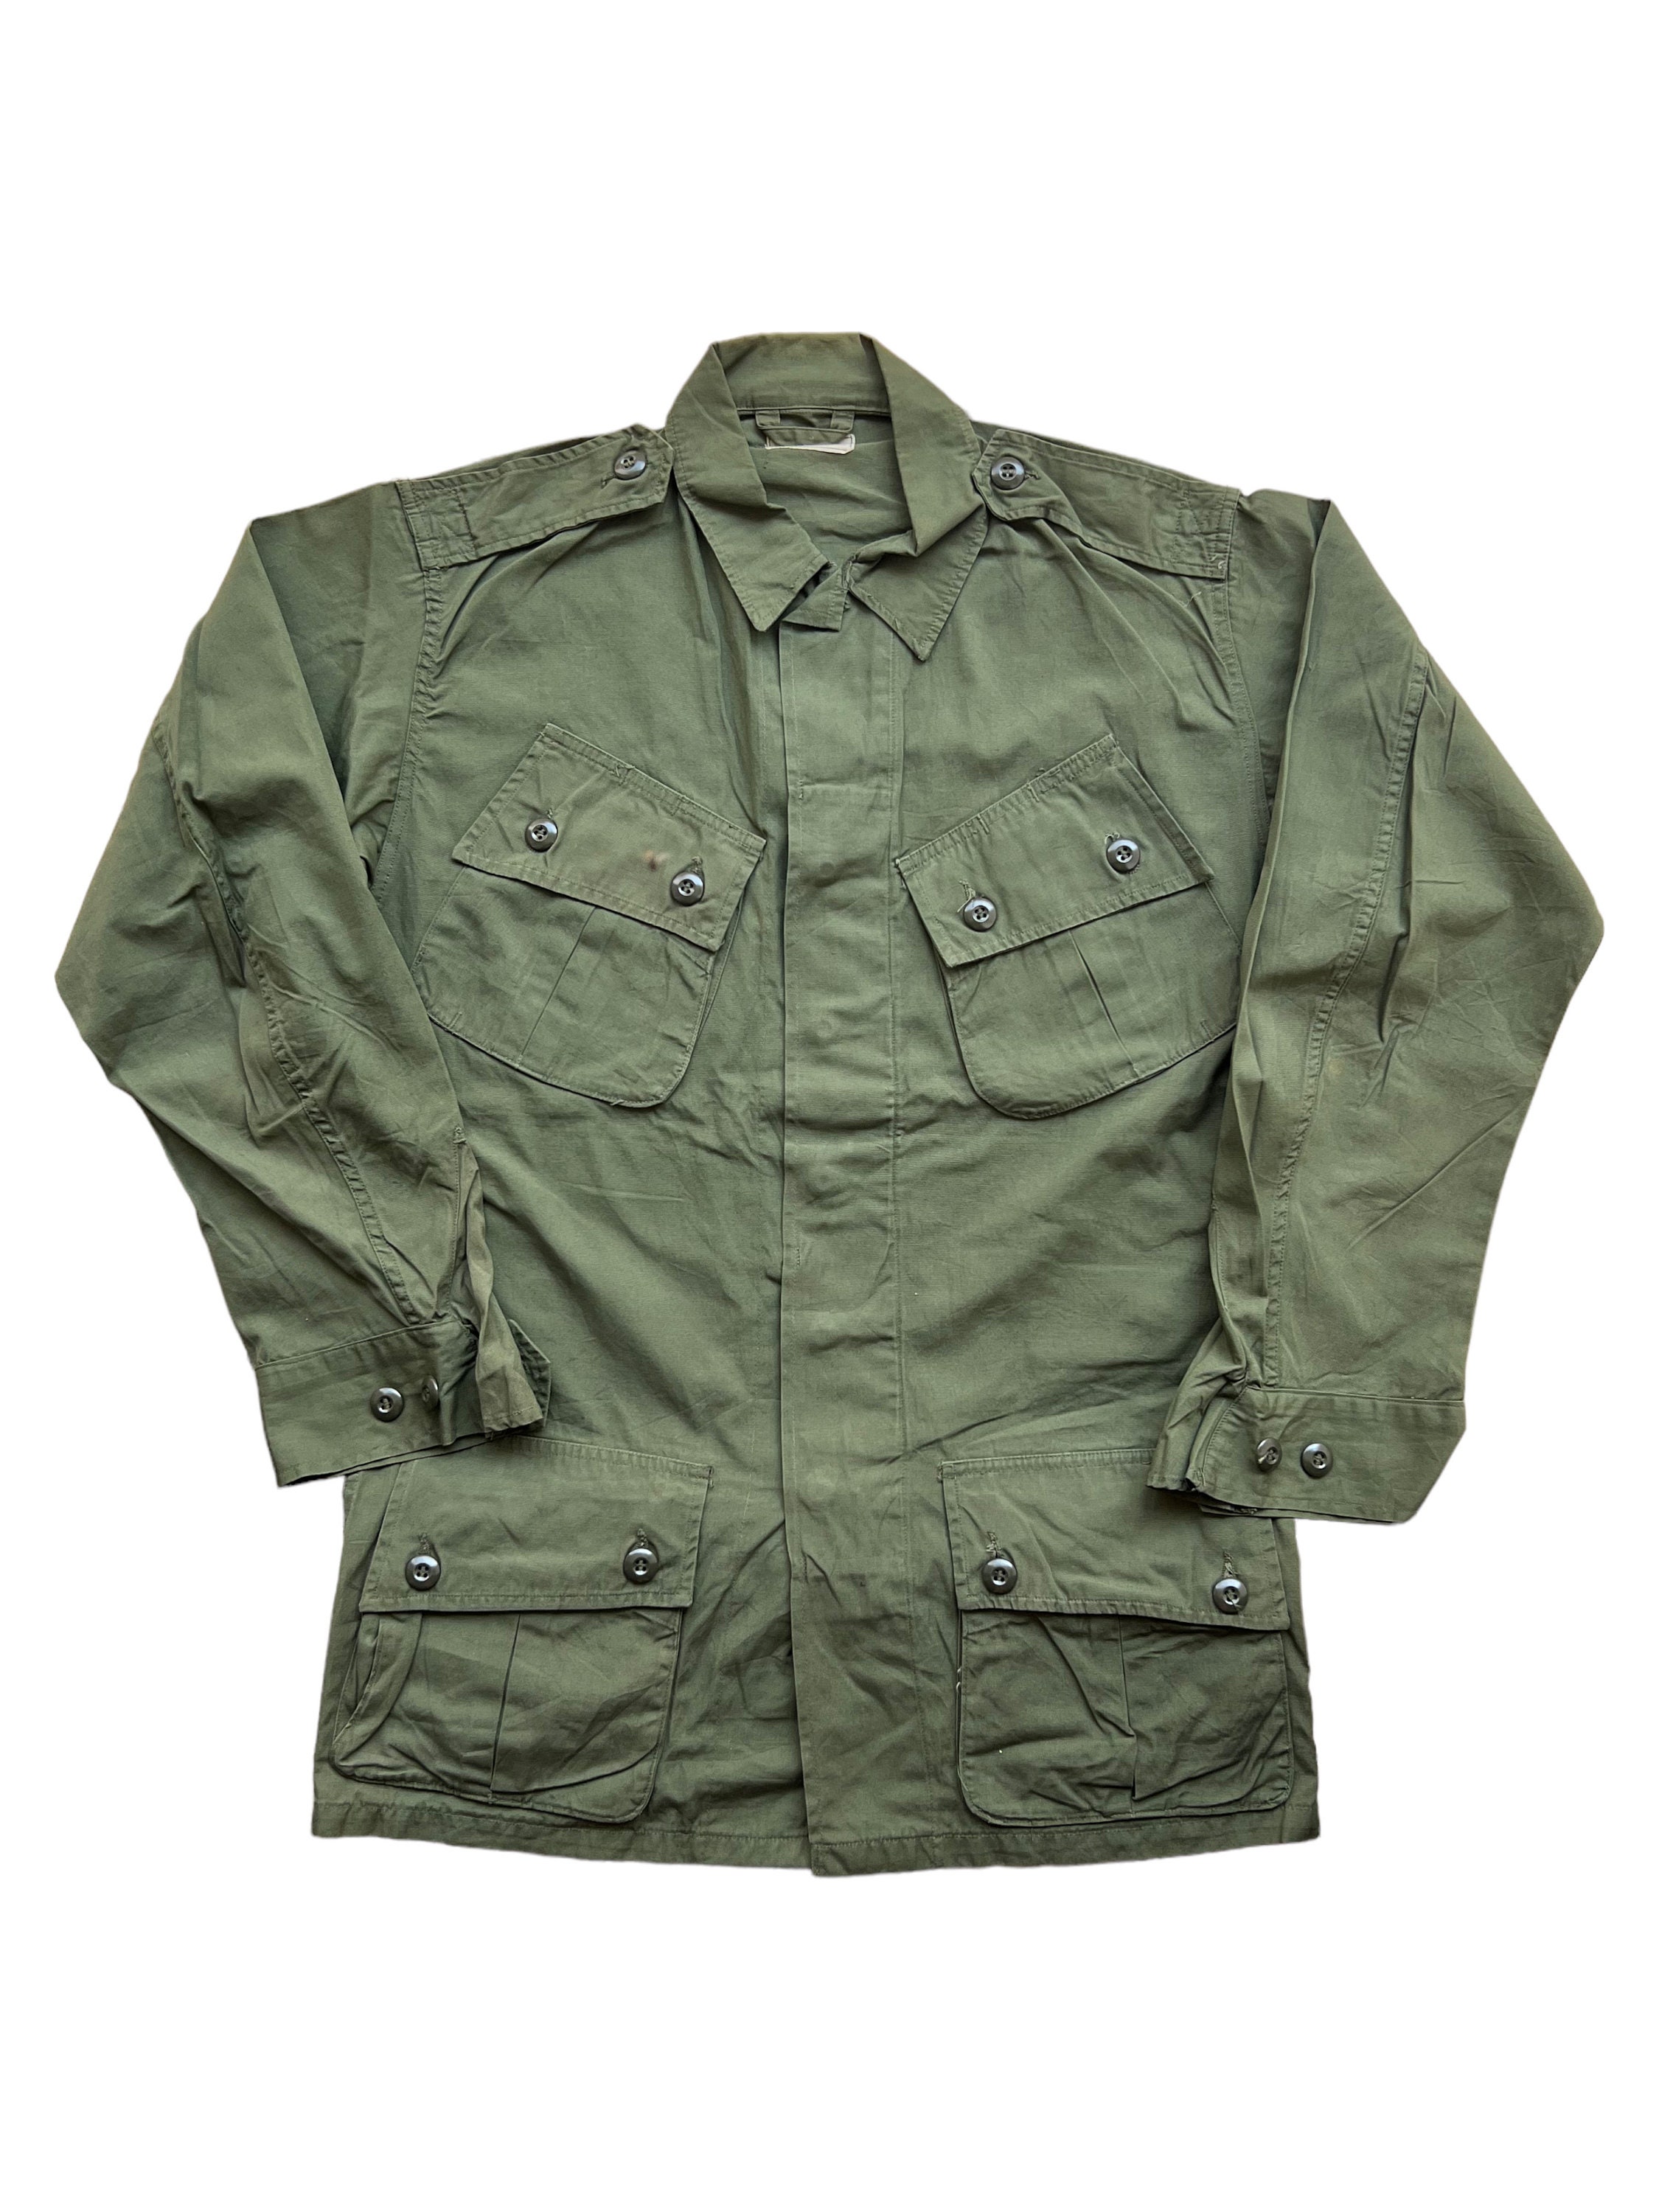 Very Rare Vintage Jacket Shirt Jungle Fatigues Type 1 Pattern 1 Vietnam ...